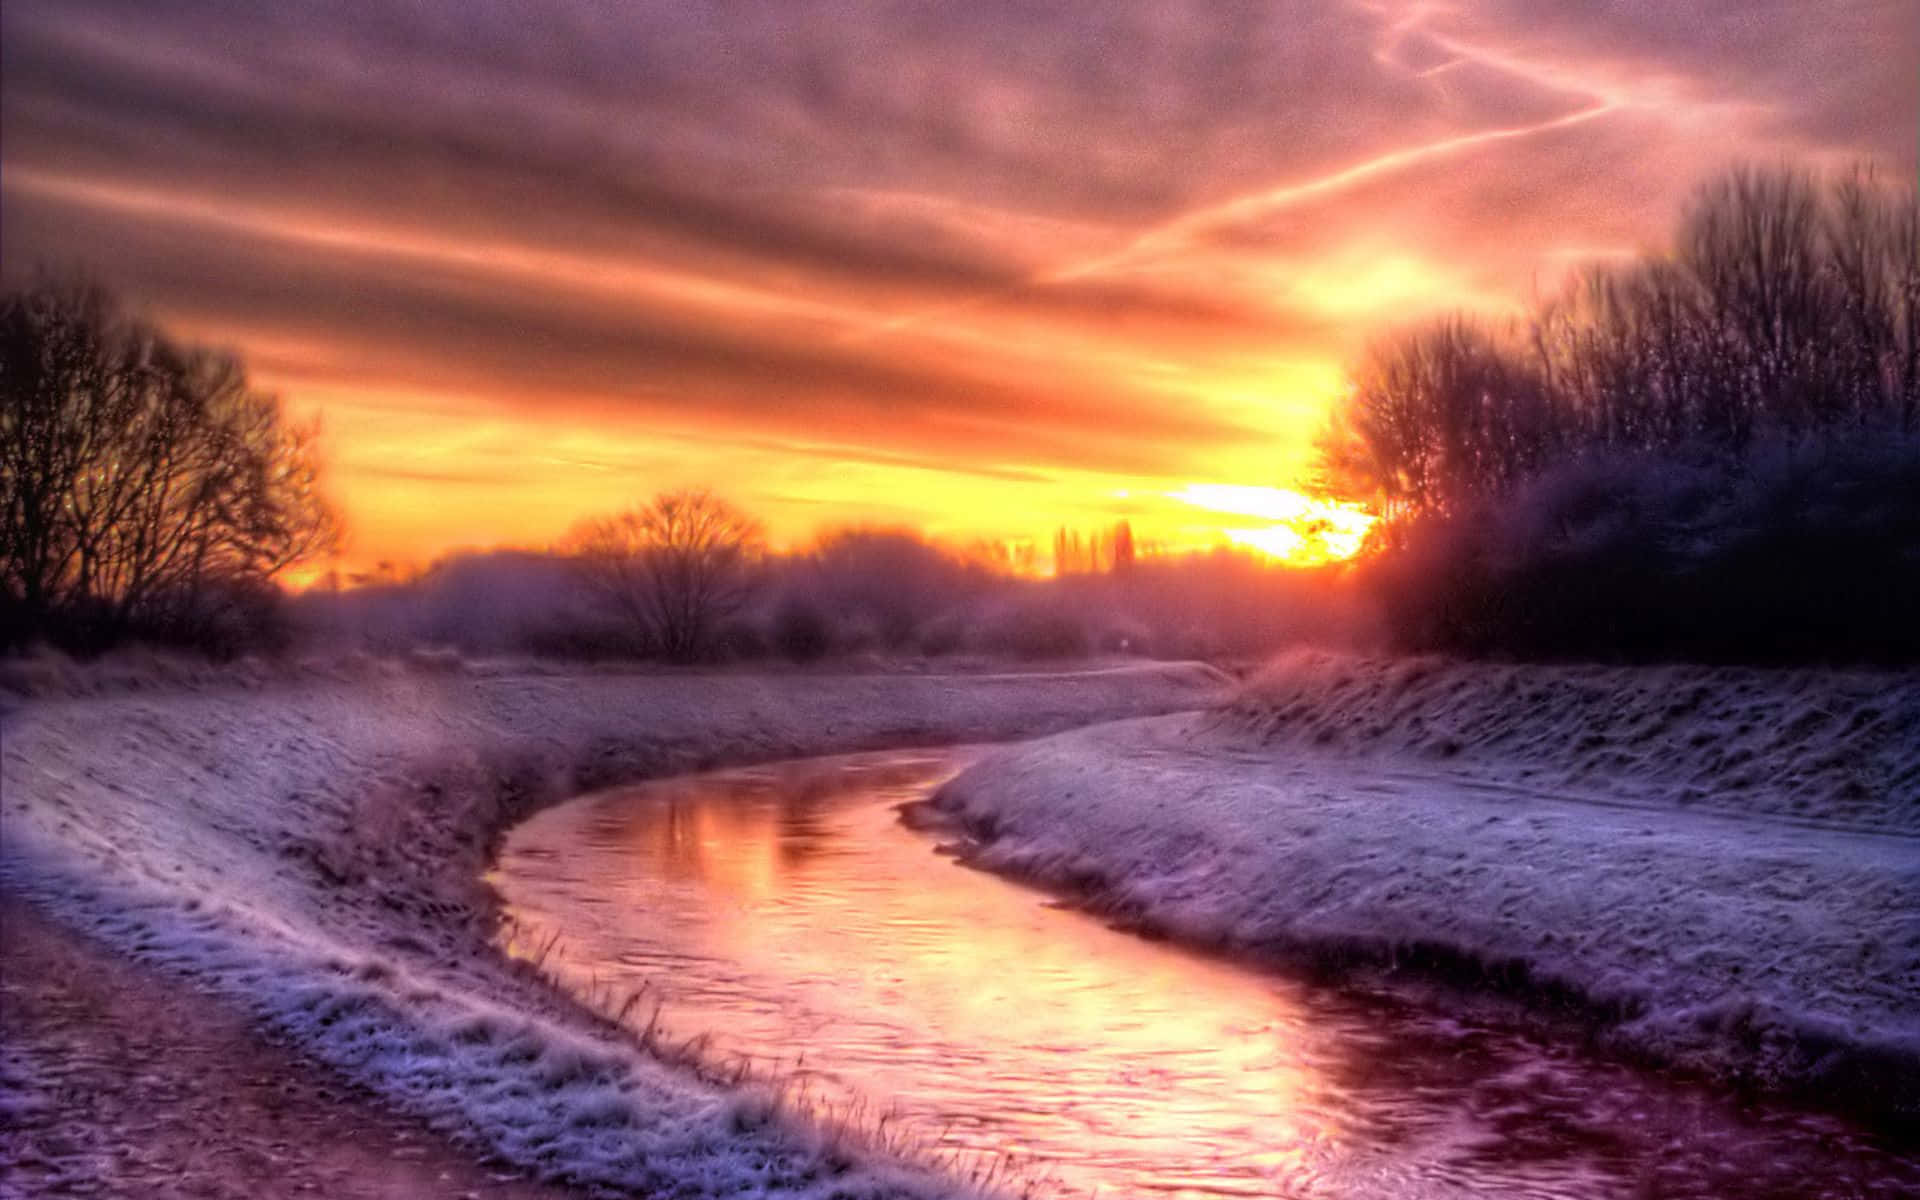 Winter Sunset Over Snowy Landscape Wallpaper